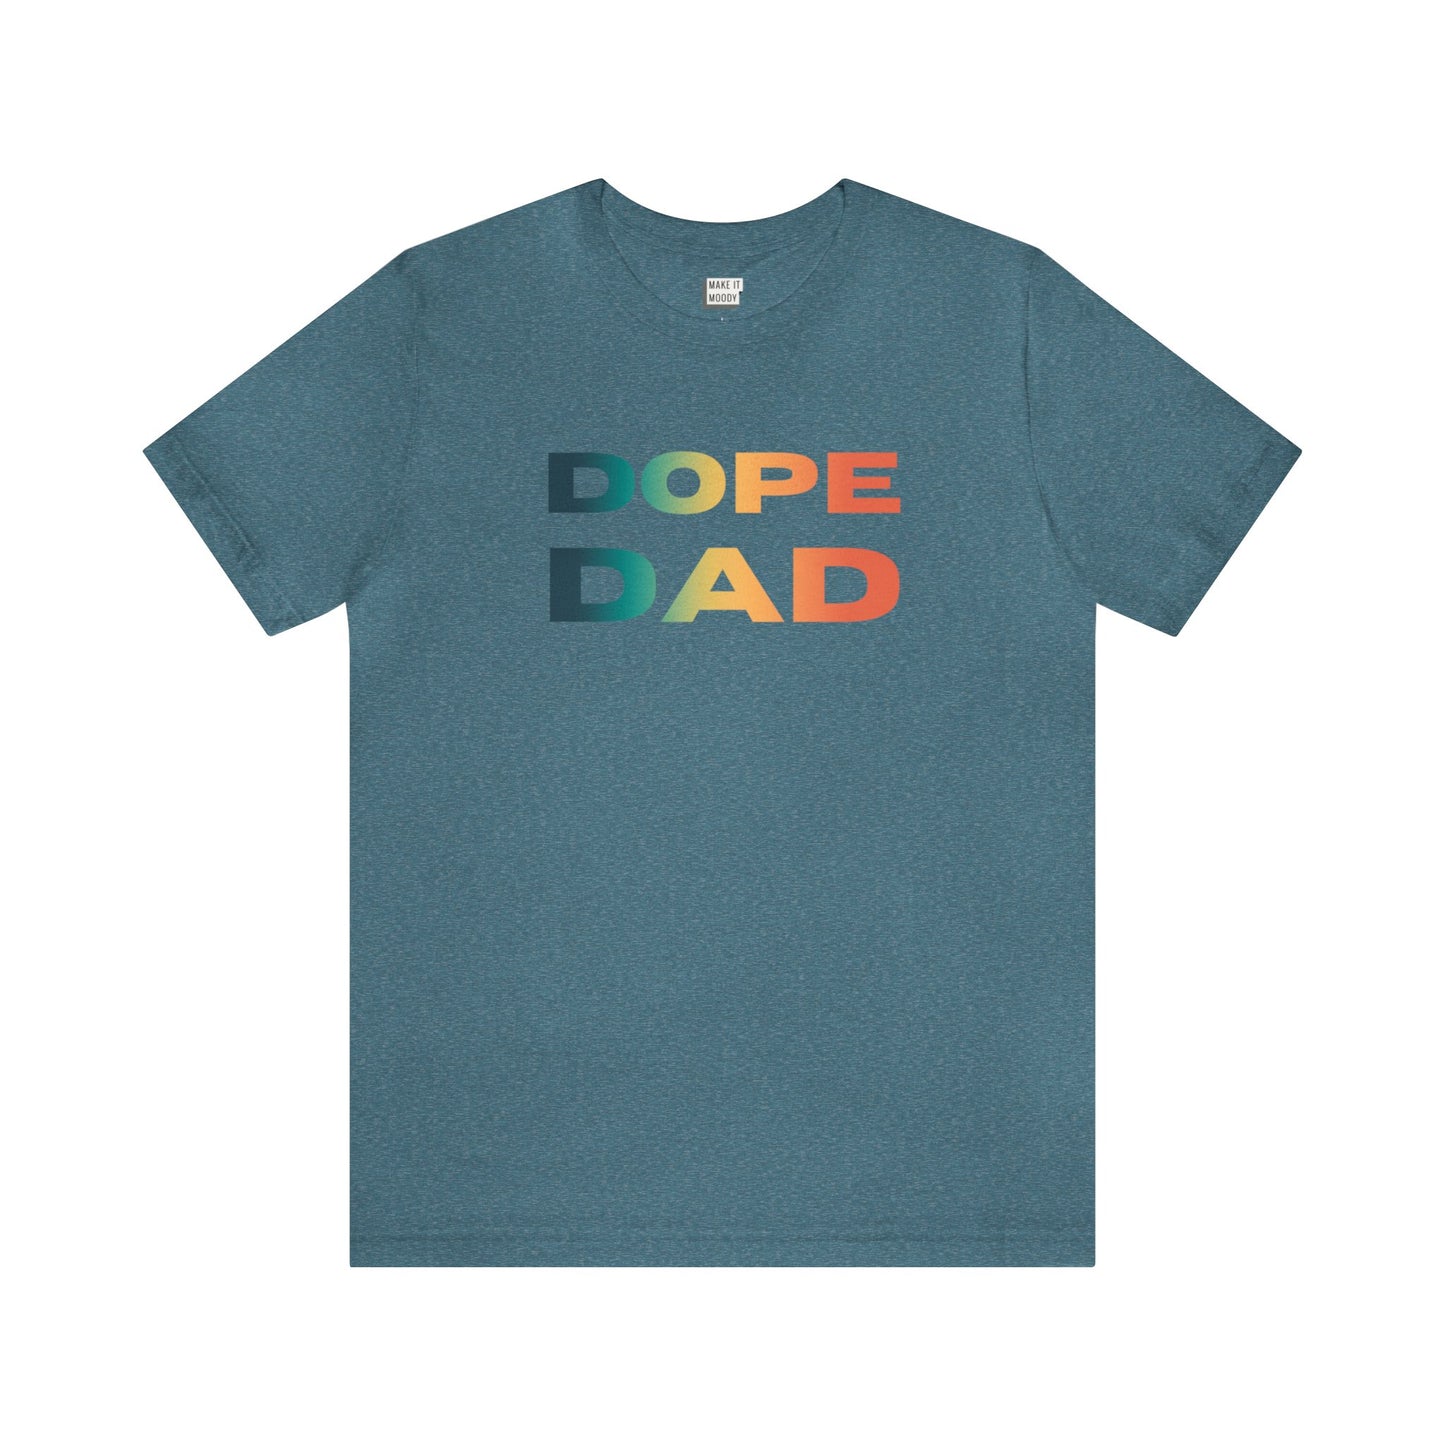 "Dope Dad" Tee